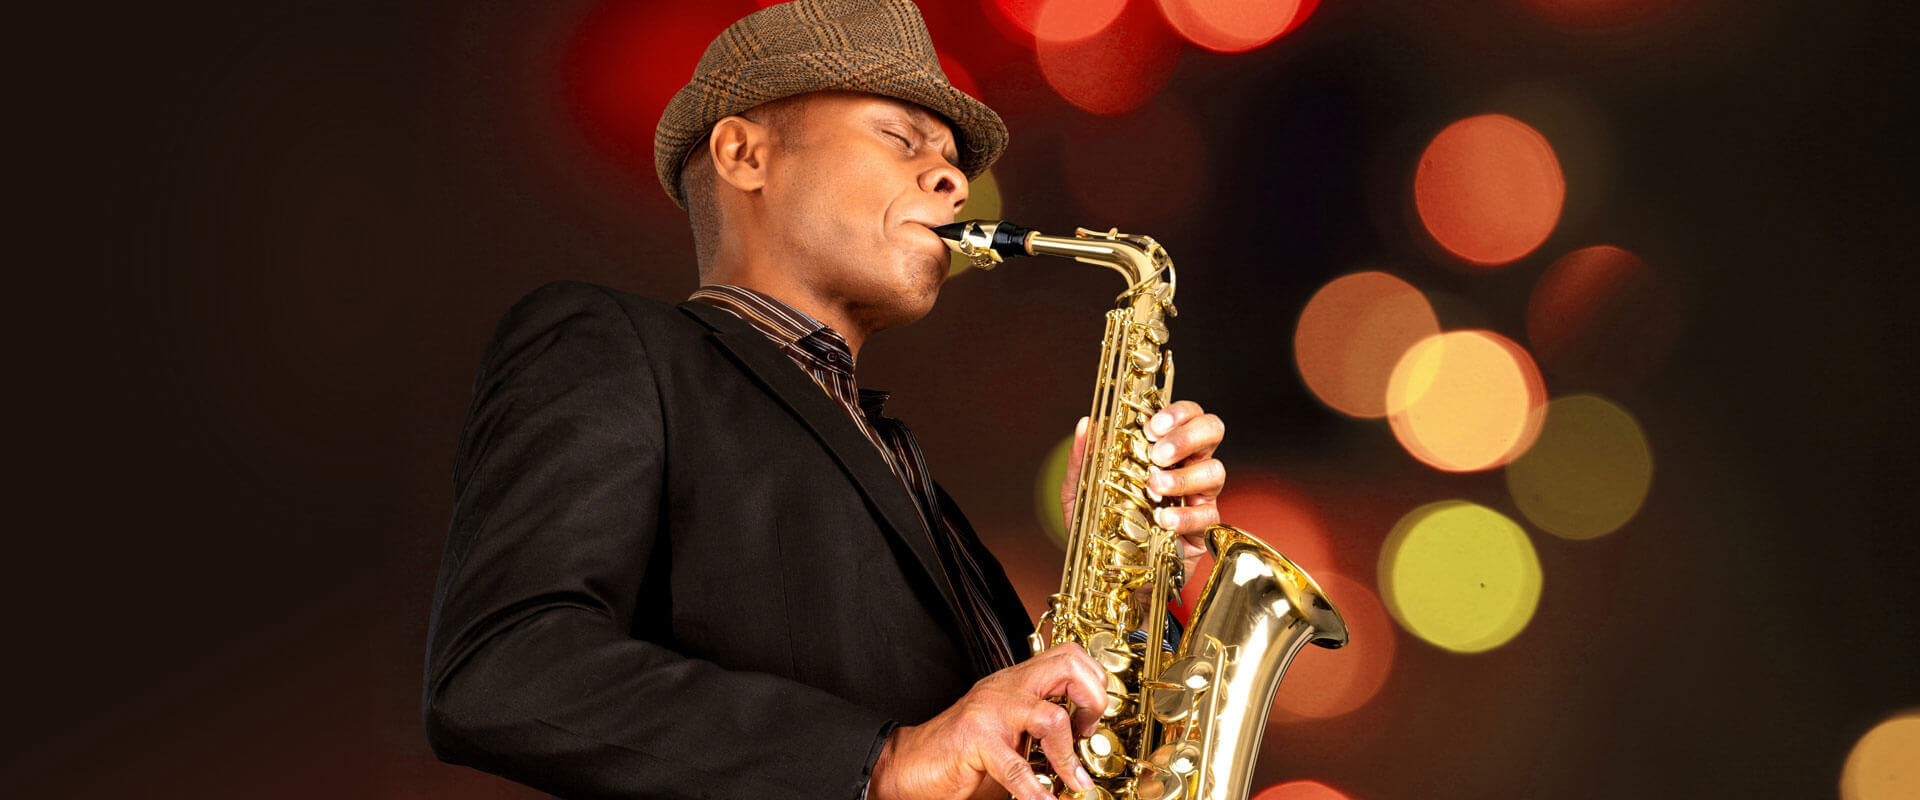 Saxophone Lessons Denver, CO